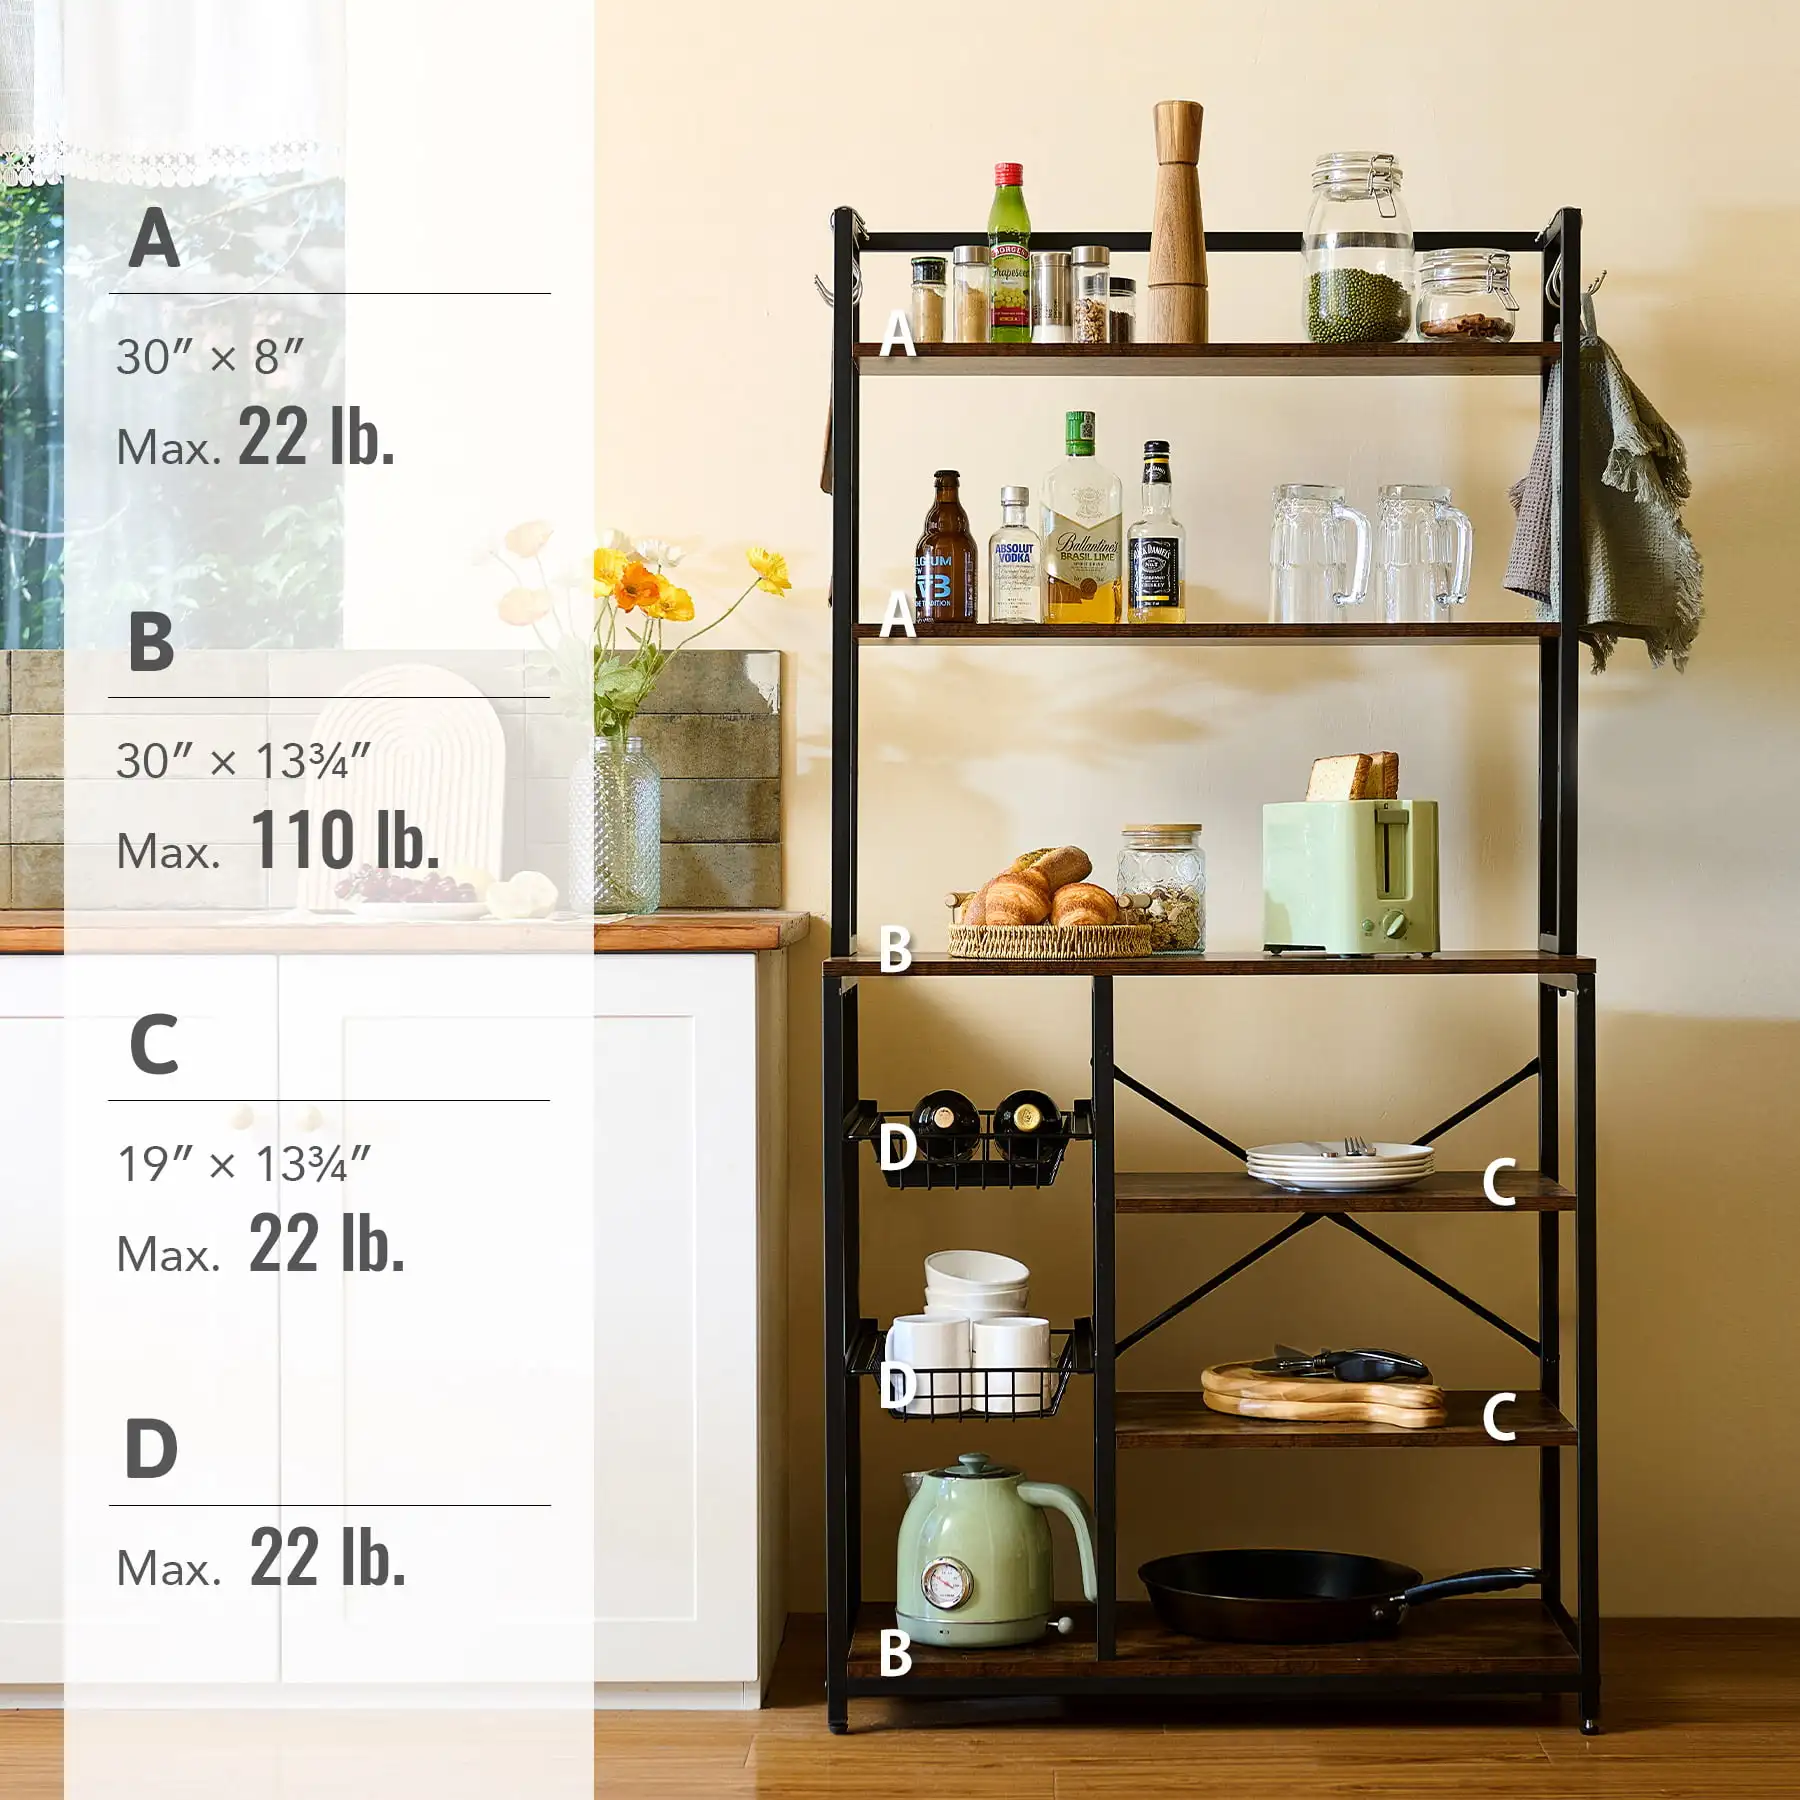 

Bestco 6 Tier Shelf with Adjustable Racks Baskets Kitchen Bathroom Corner Storage